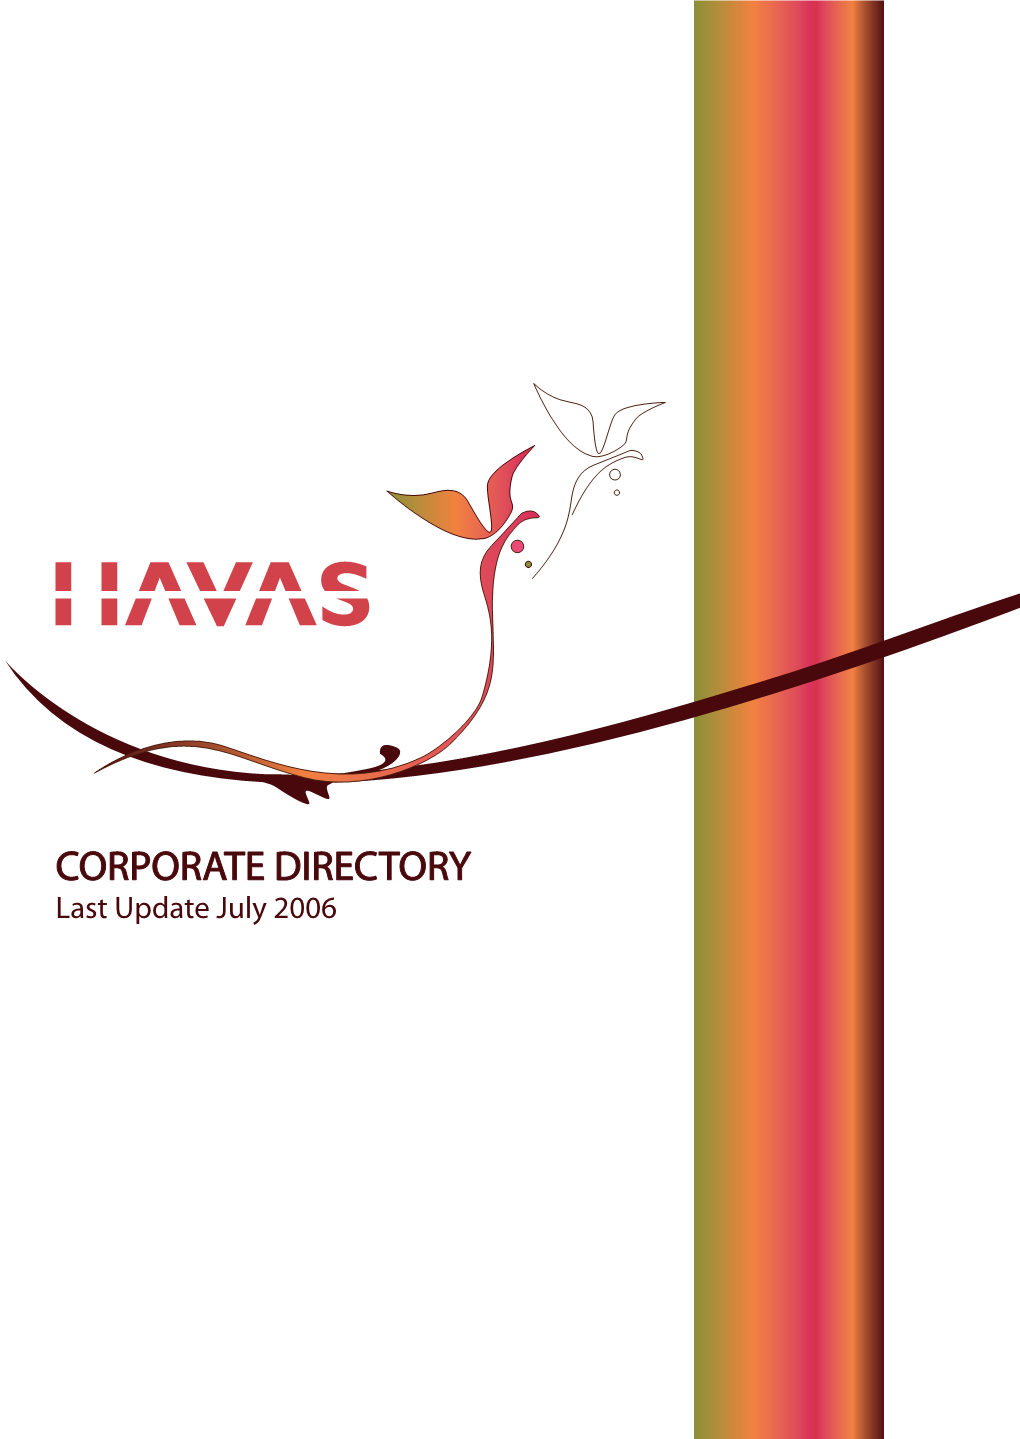 Havas Corporate Directory July 2006